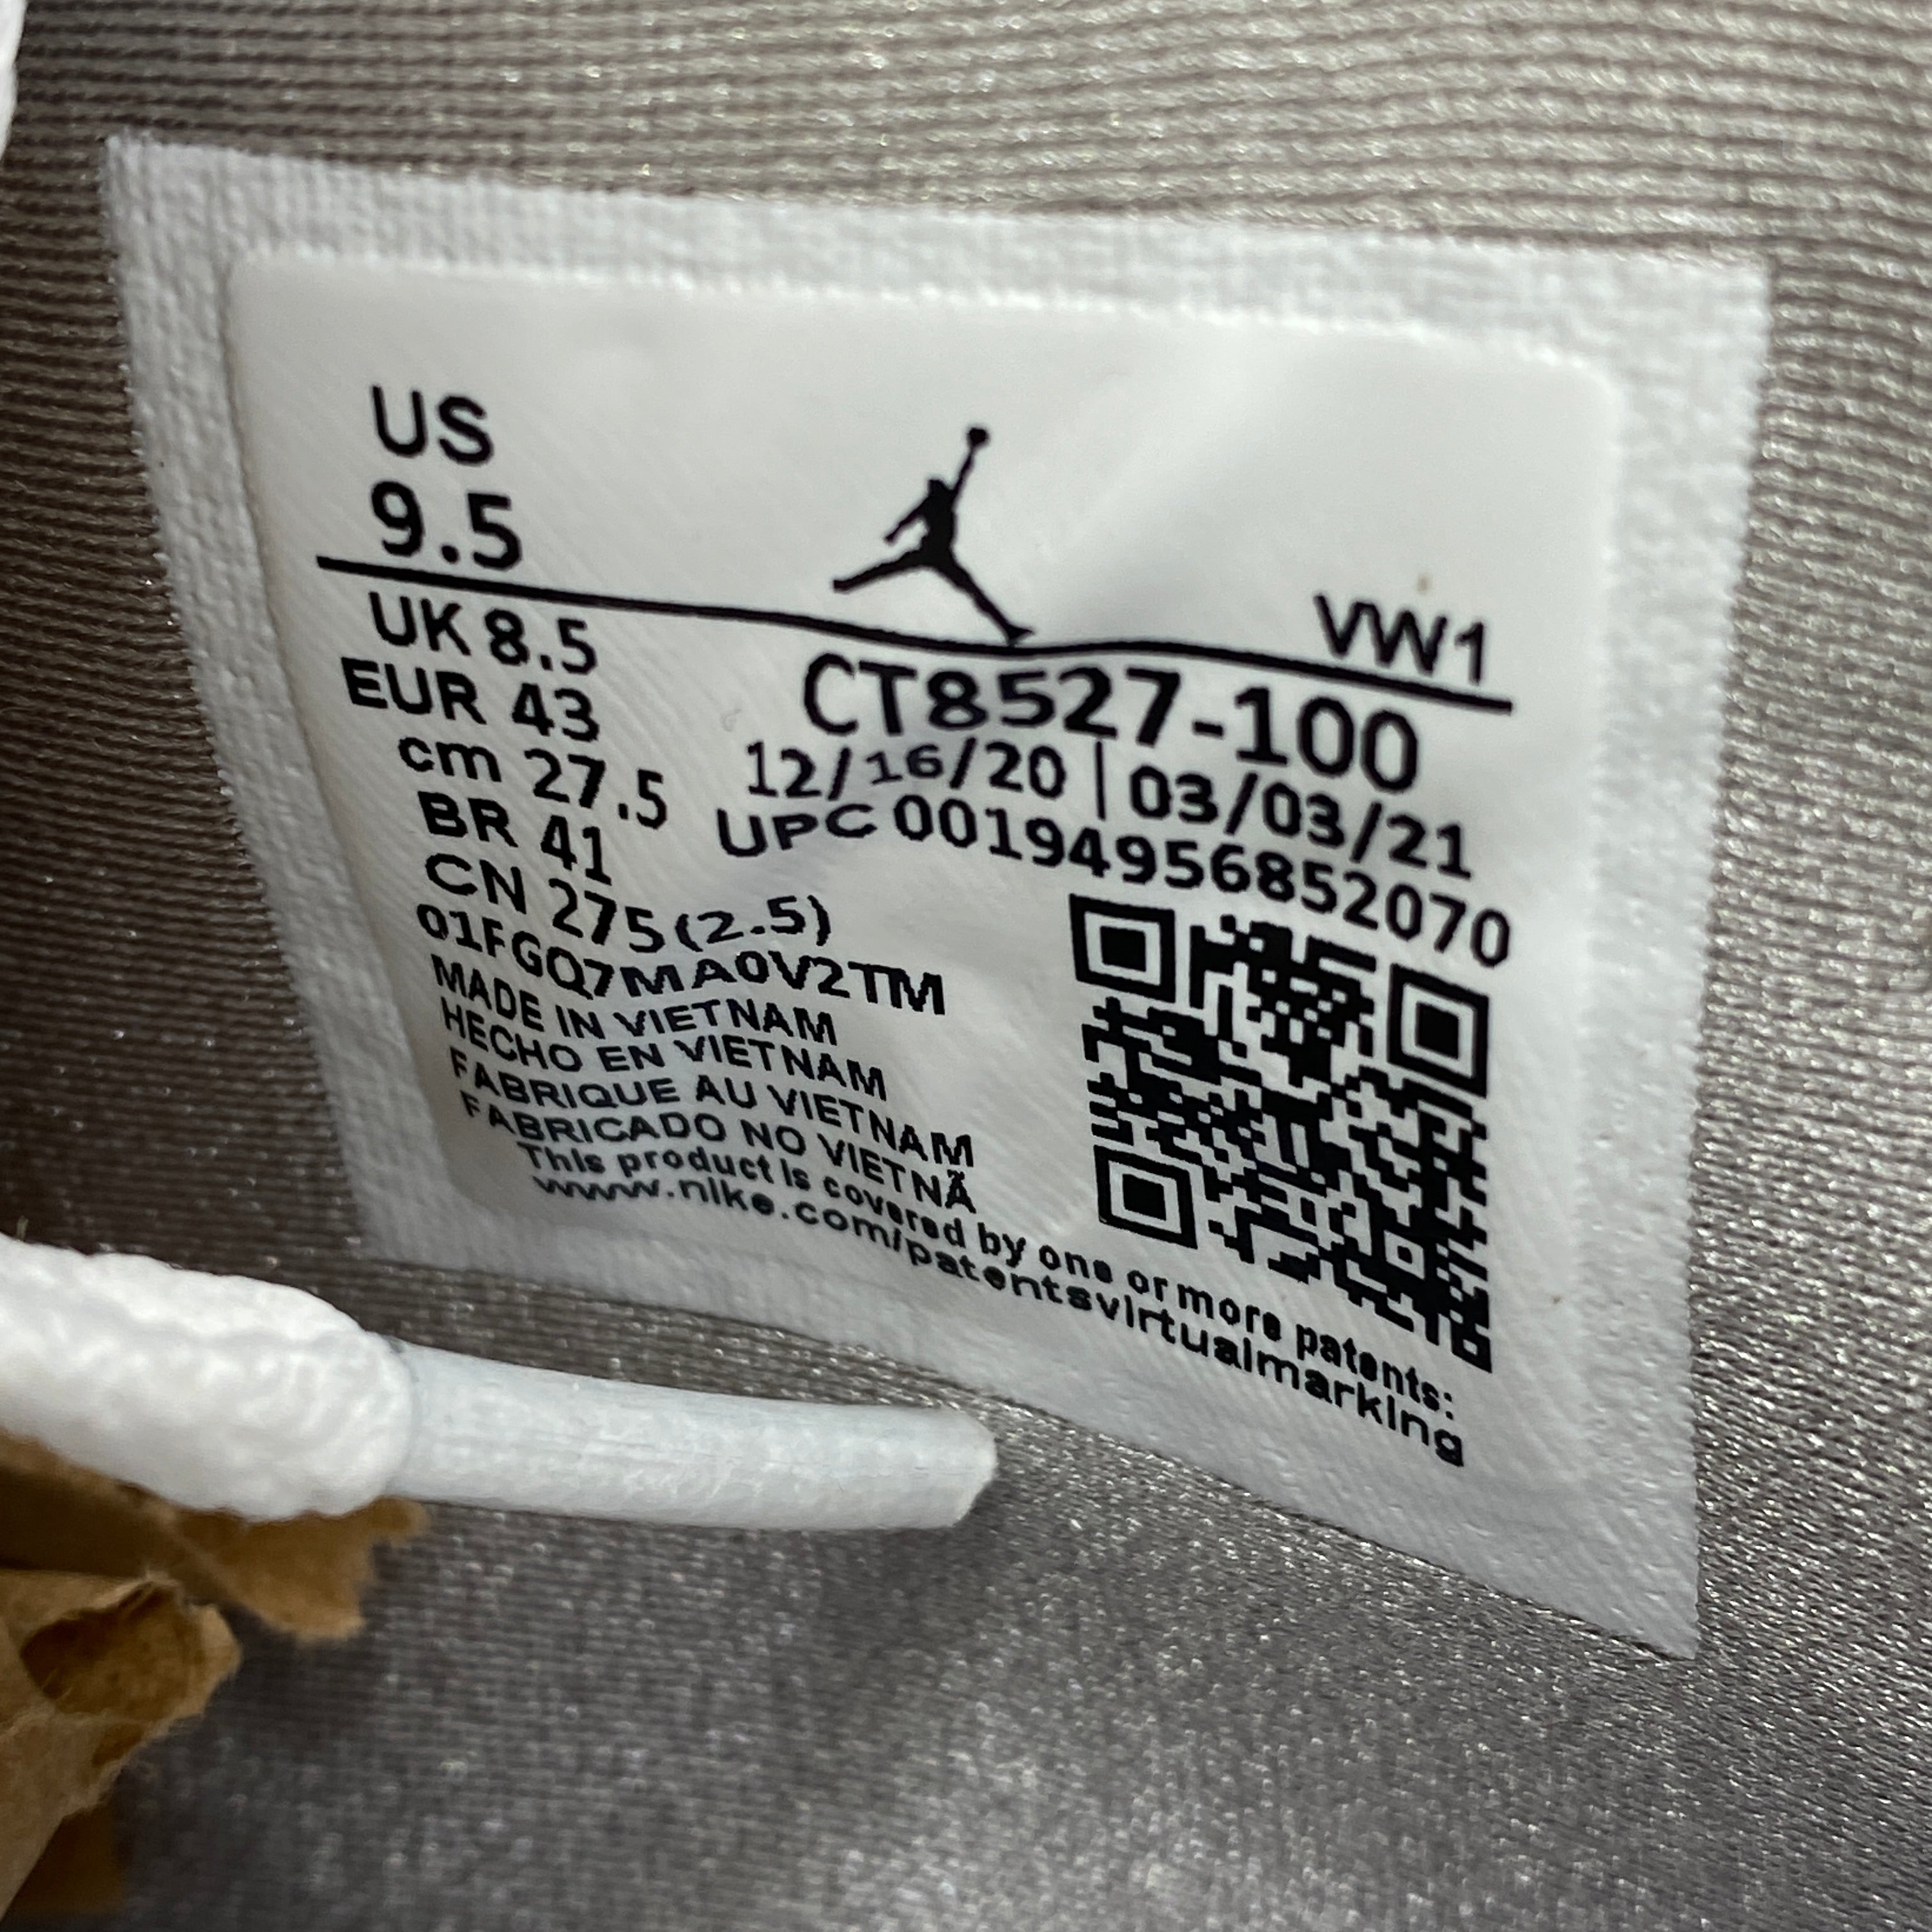 Air Jordan 4 Retro &quot;White Oreo&quot; 2021 New Size 9.5